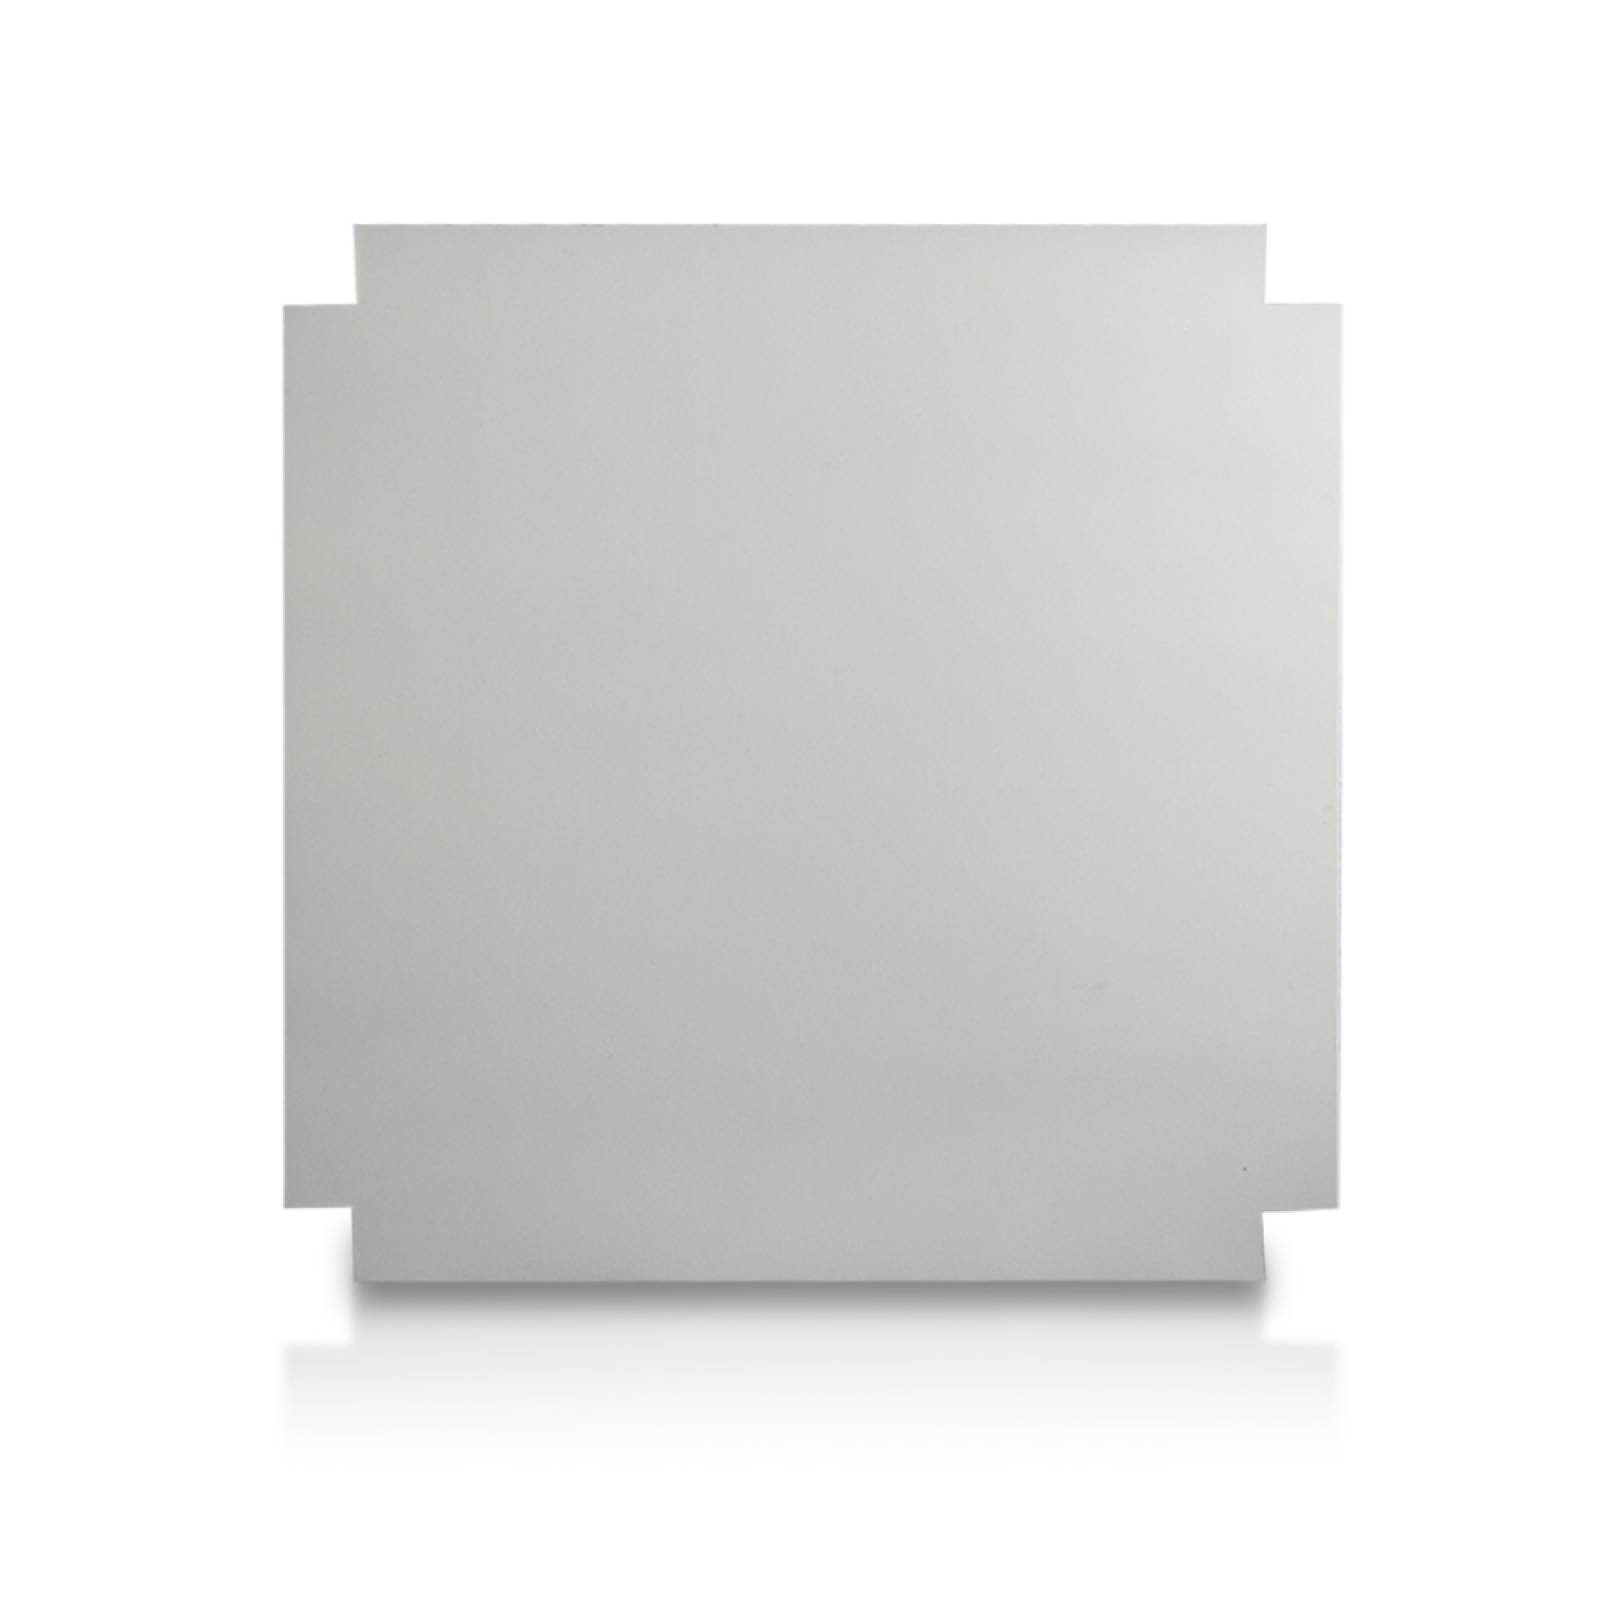 Aislante Cerámico Protector Térmico para Pared de 55 x 55 cm Blanco, Mod: 1PTPBl